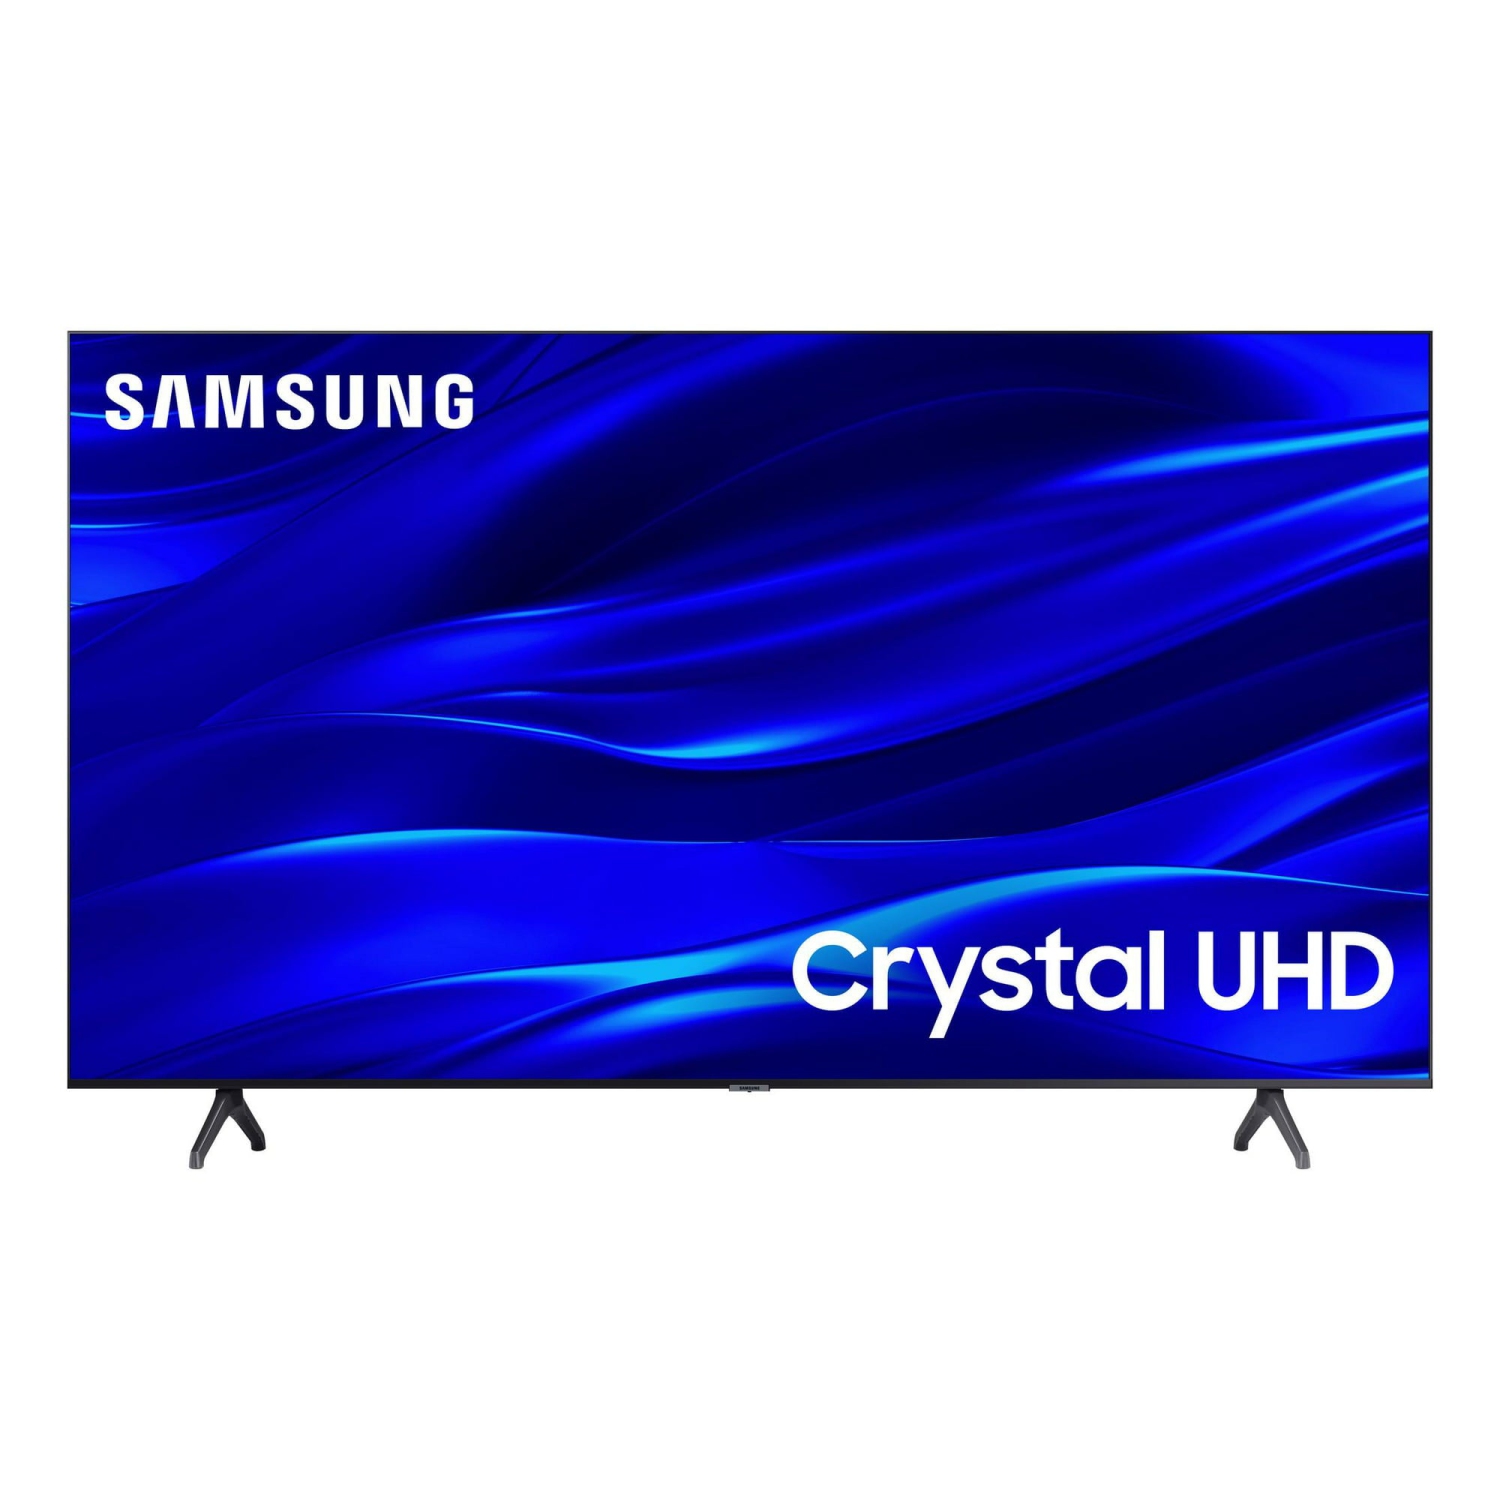 REFURBISHED(Good) - SAMSUNG 43" Class TU690T Crystal UHD 4K Smart TV powered by Tizen (UN43TU690T)